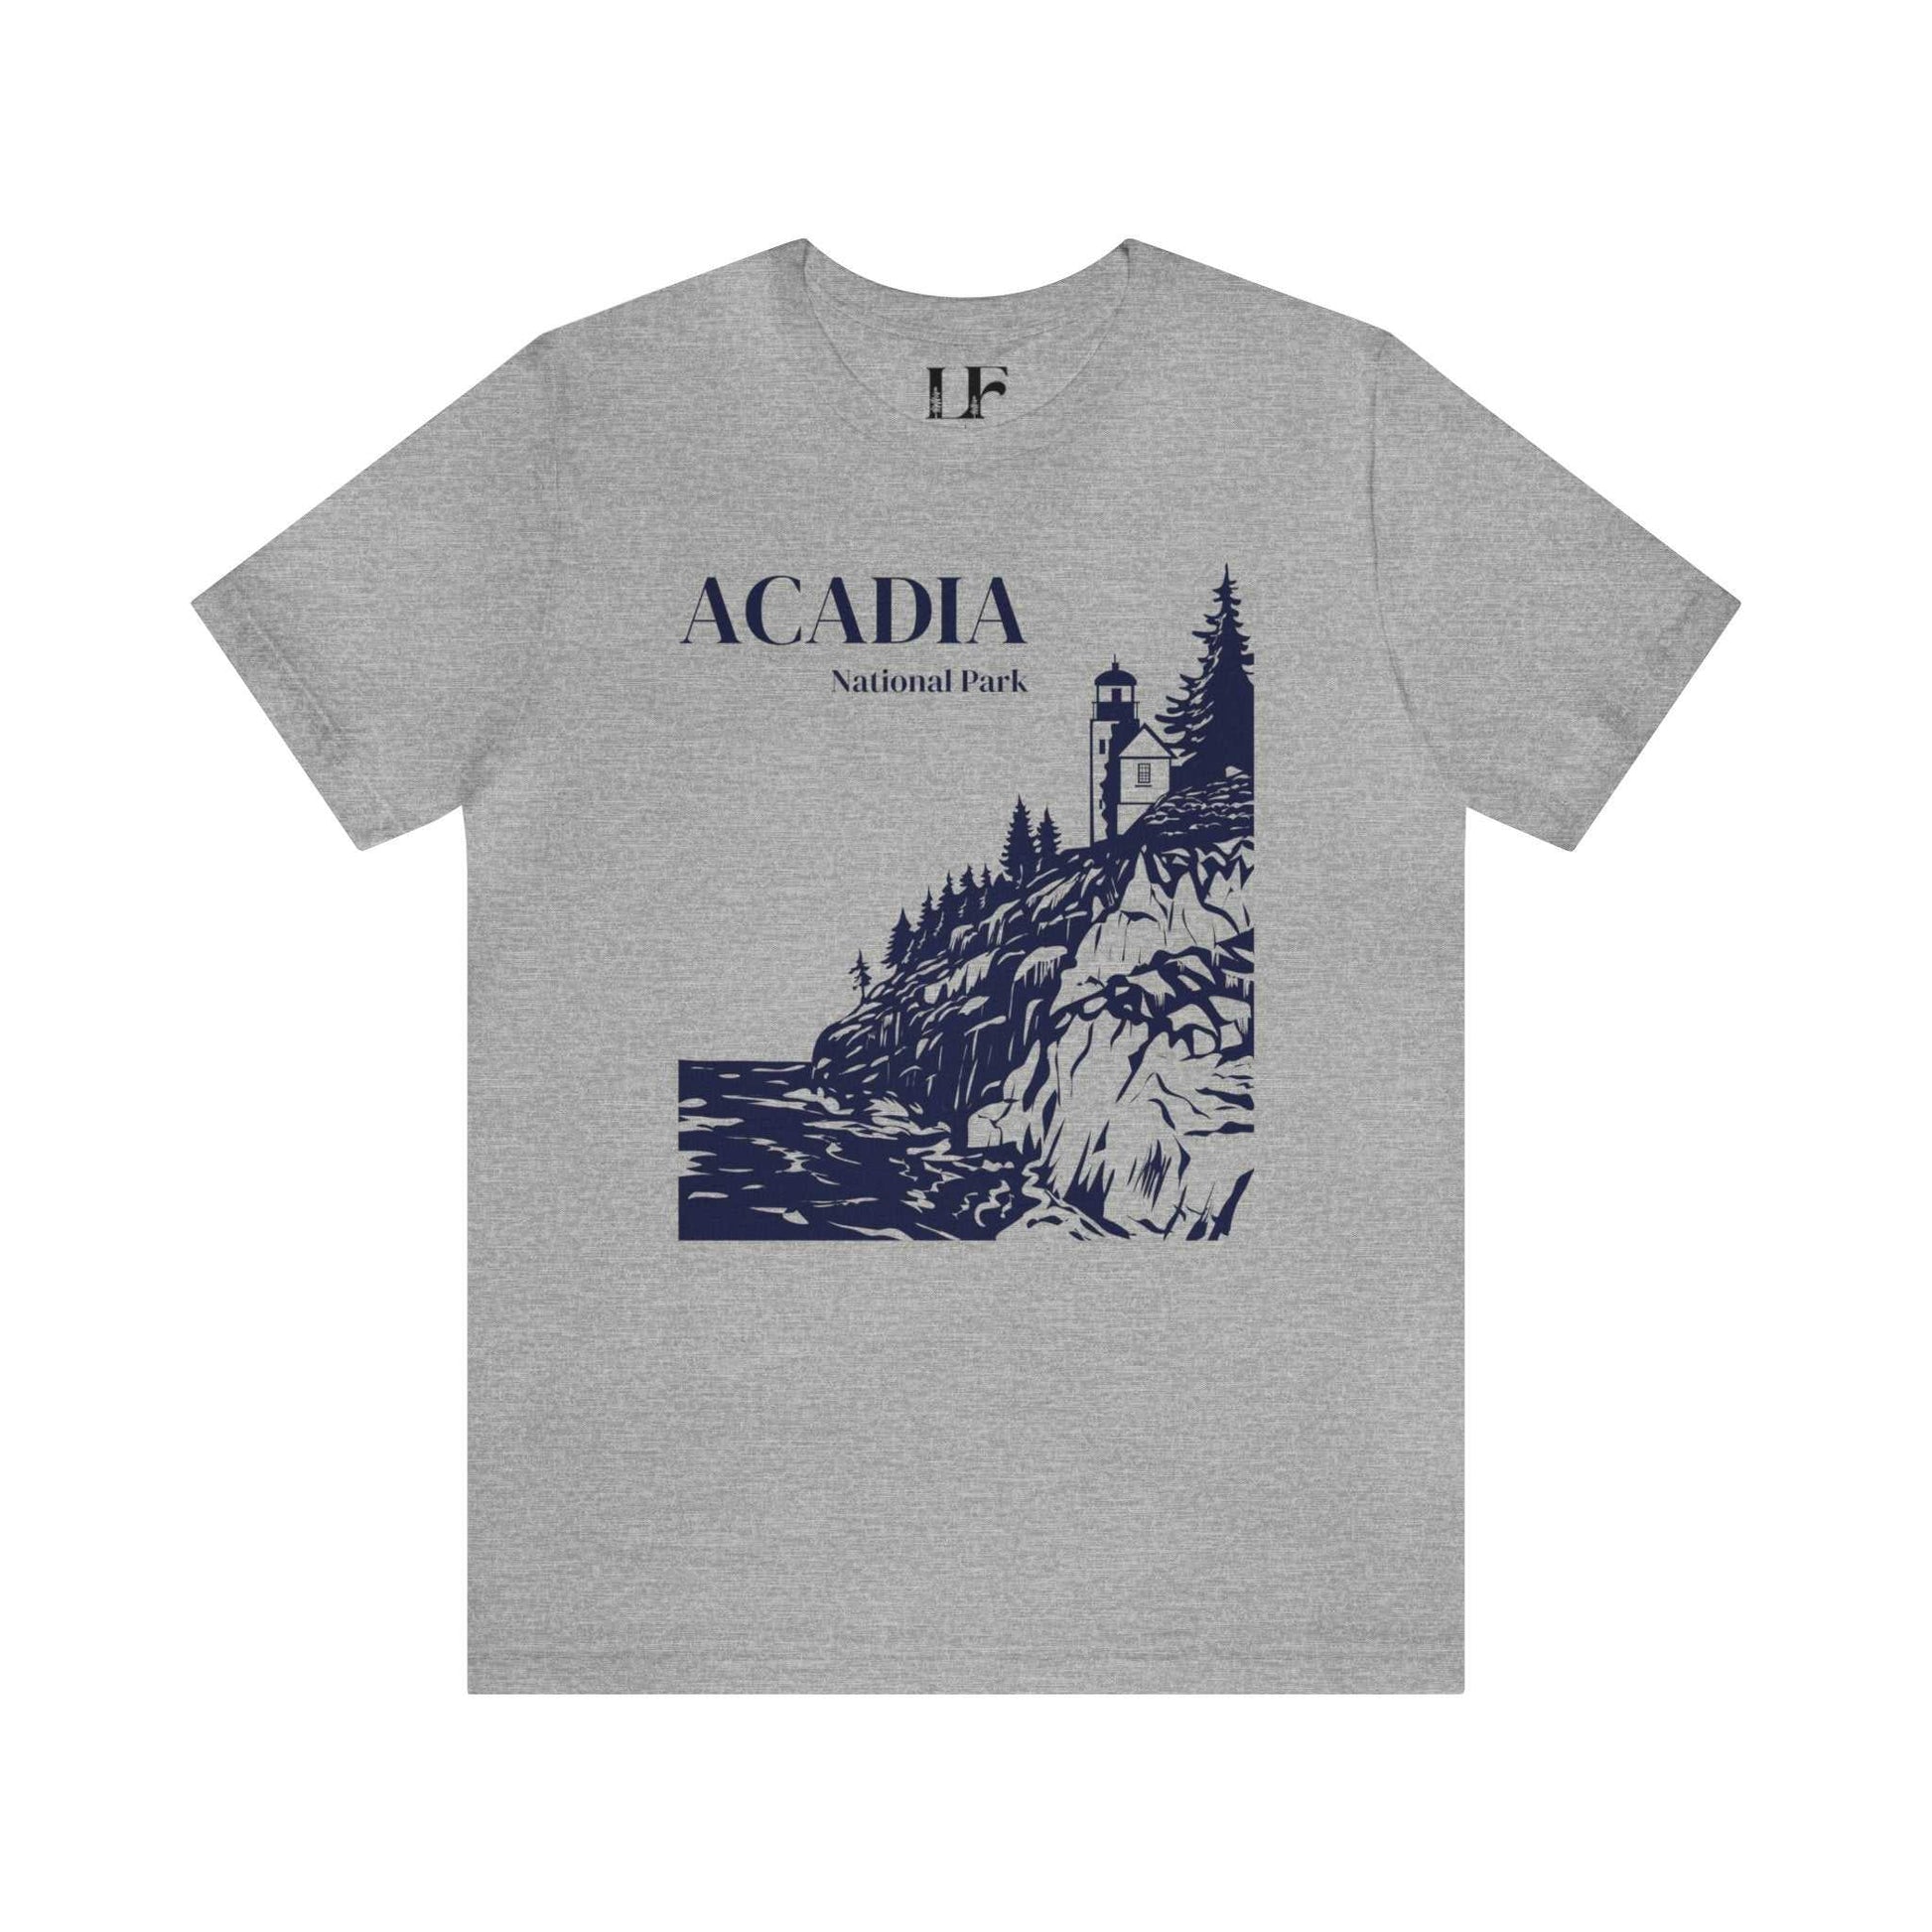 Acadia National Park Bar Harbor ShirtA classic Acadia National Park T-Shirt featuring the Bass Harbor Head Lighthouse landscape on the rocky New England Atlantic coastline.
Details:
- 100% jersey cotton